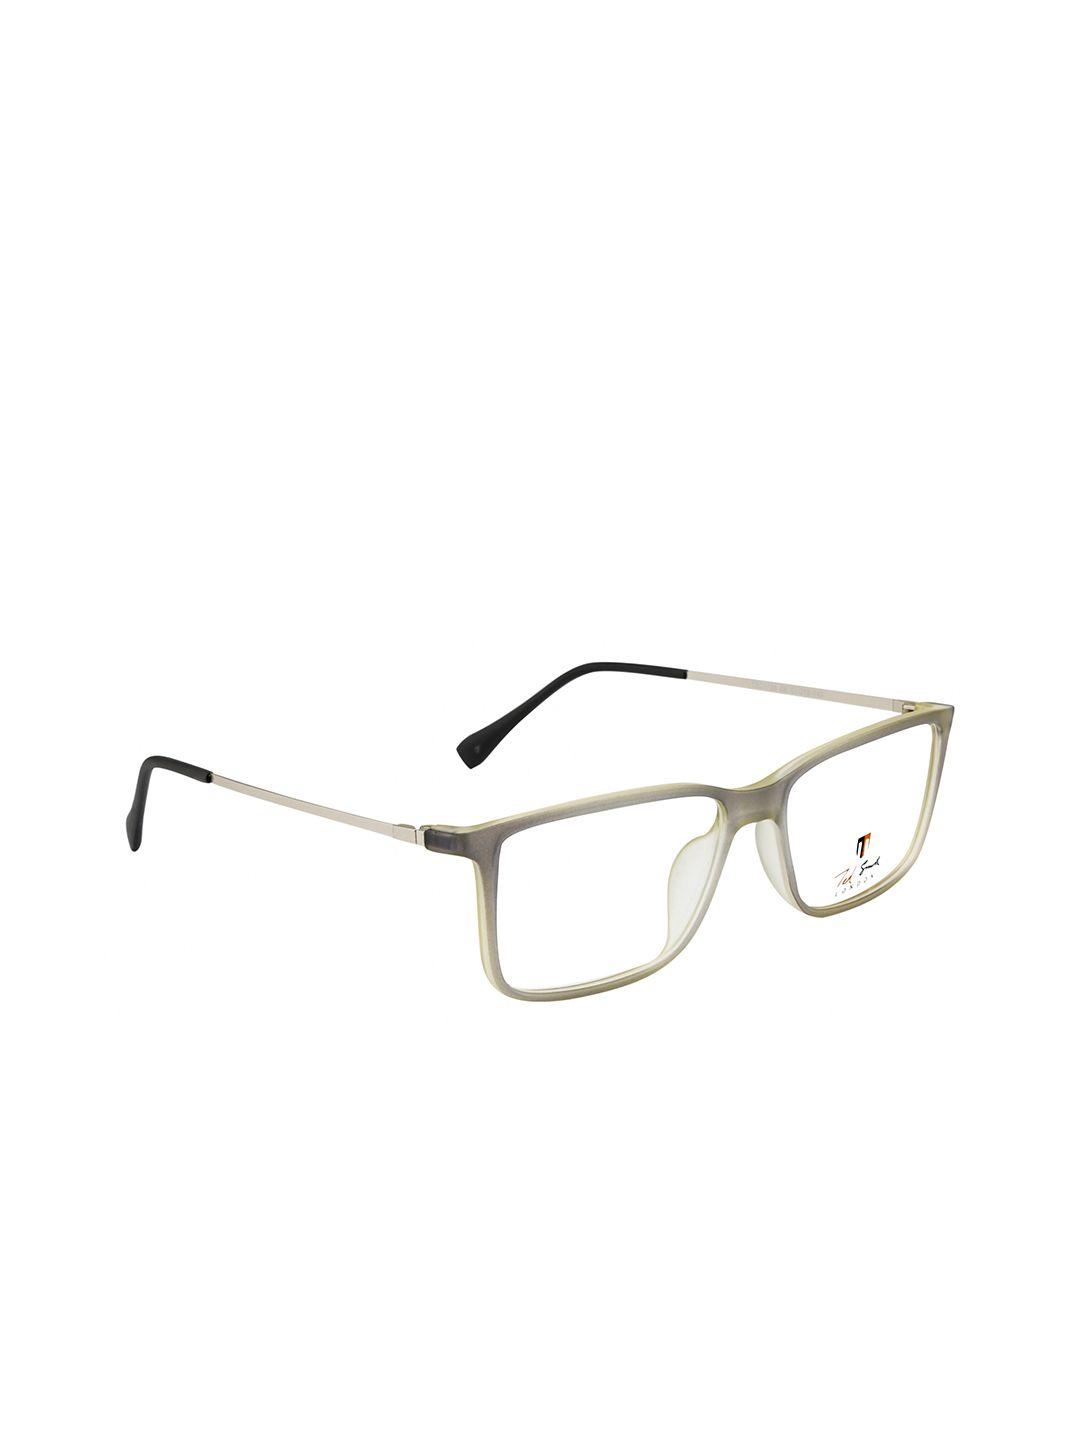 ted smith unisex grey & gunmetal-toned full rim wayfarer frames eyeglasses